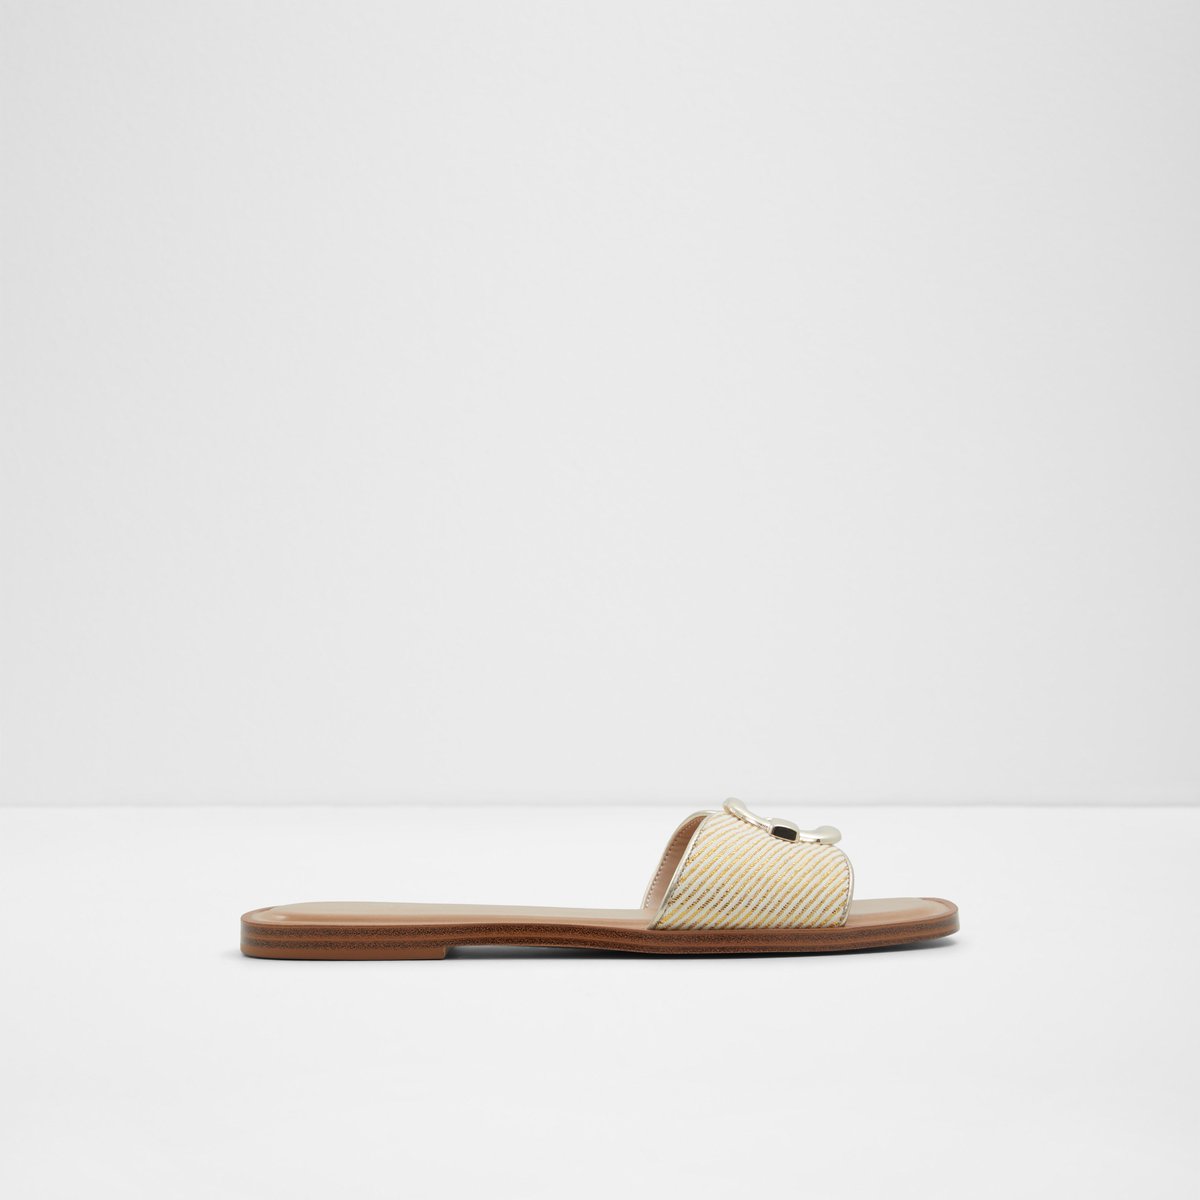 Glaeswen Slide Sandals